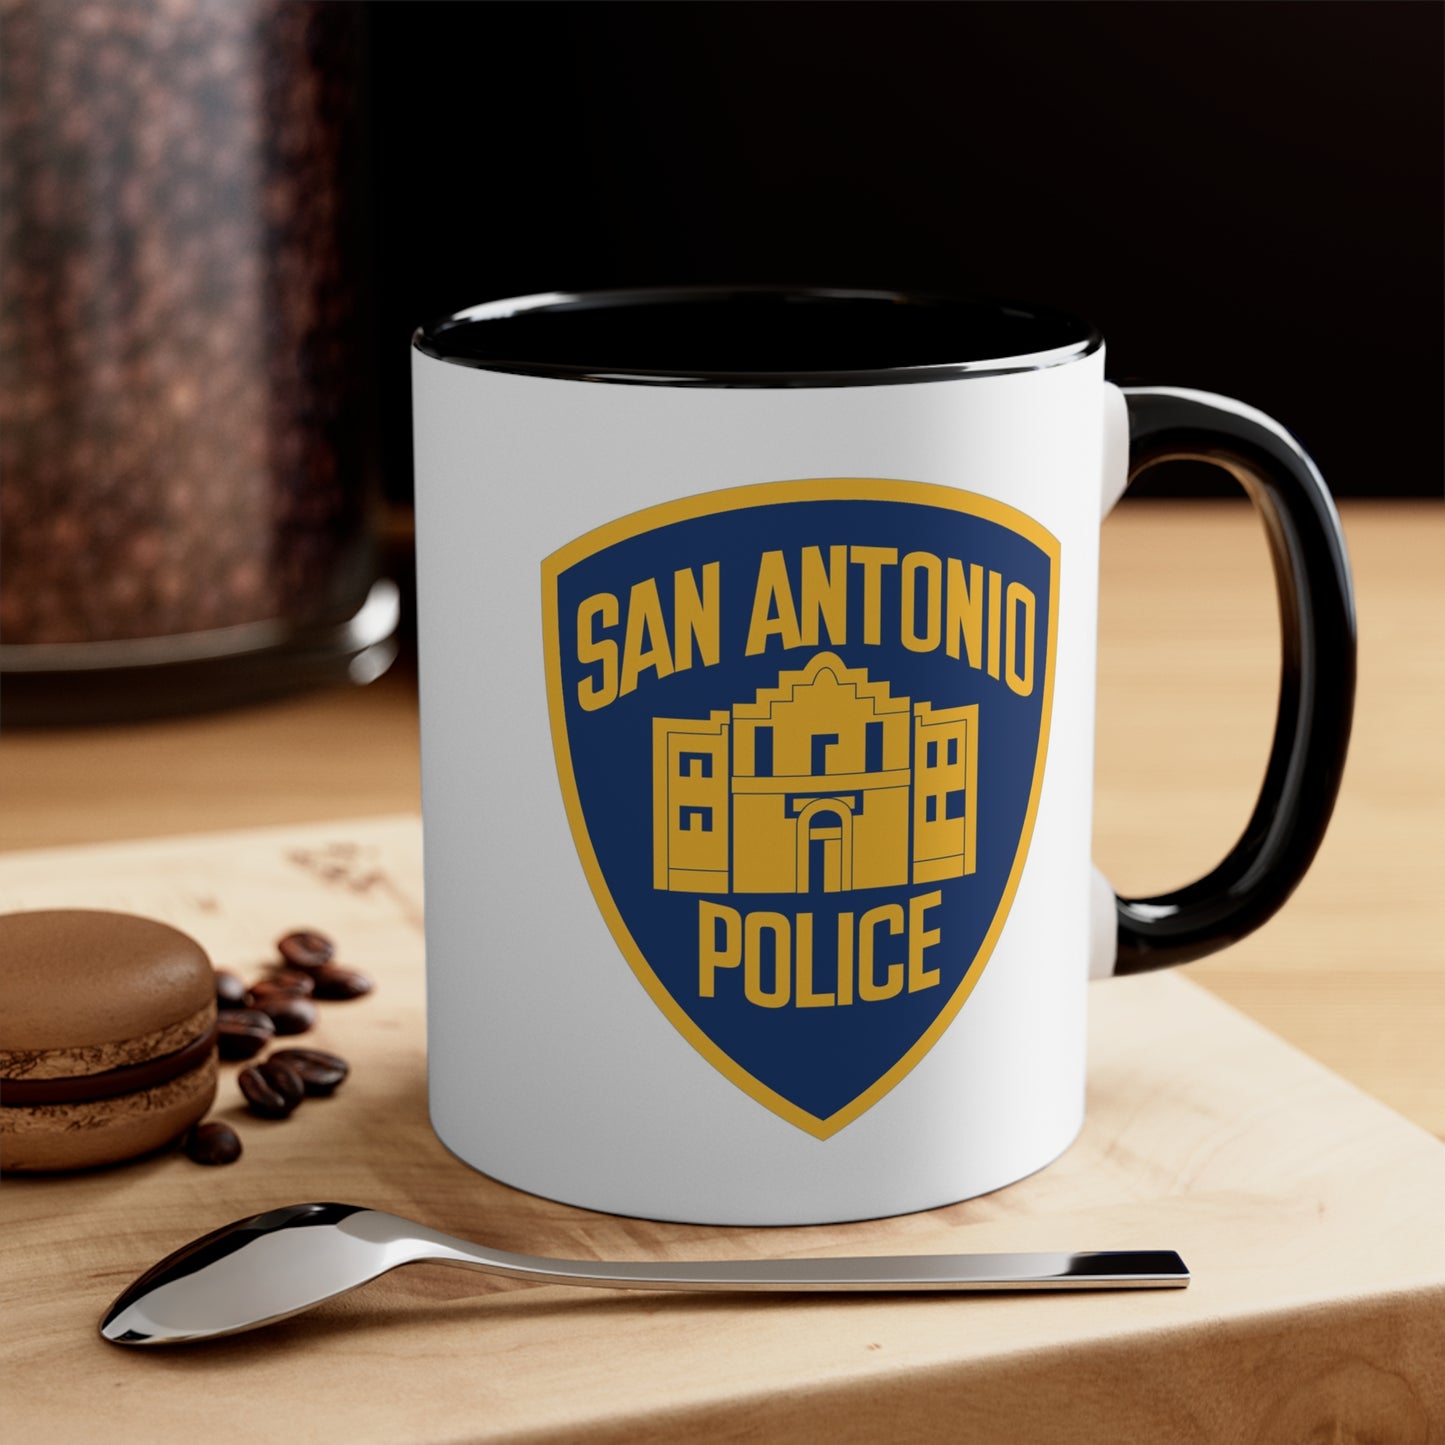 San Antonio Police Coffee Mug - Double Sided Black Accent White Ceramic 11oz by TheGlassyLass.com